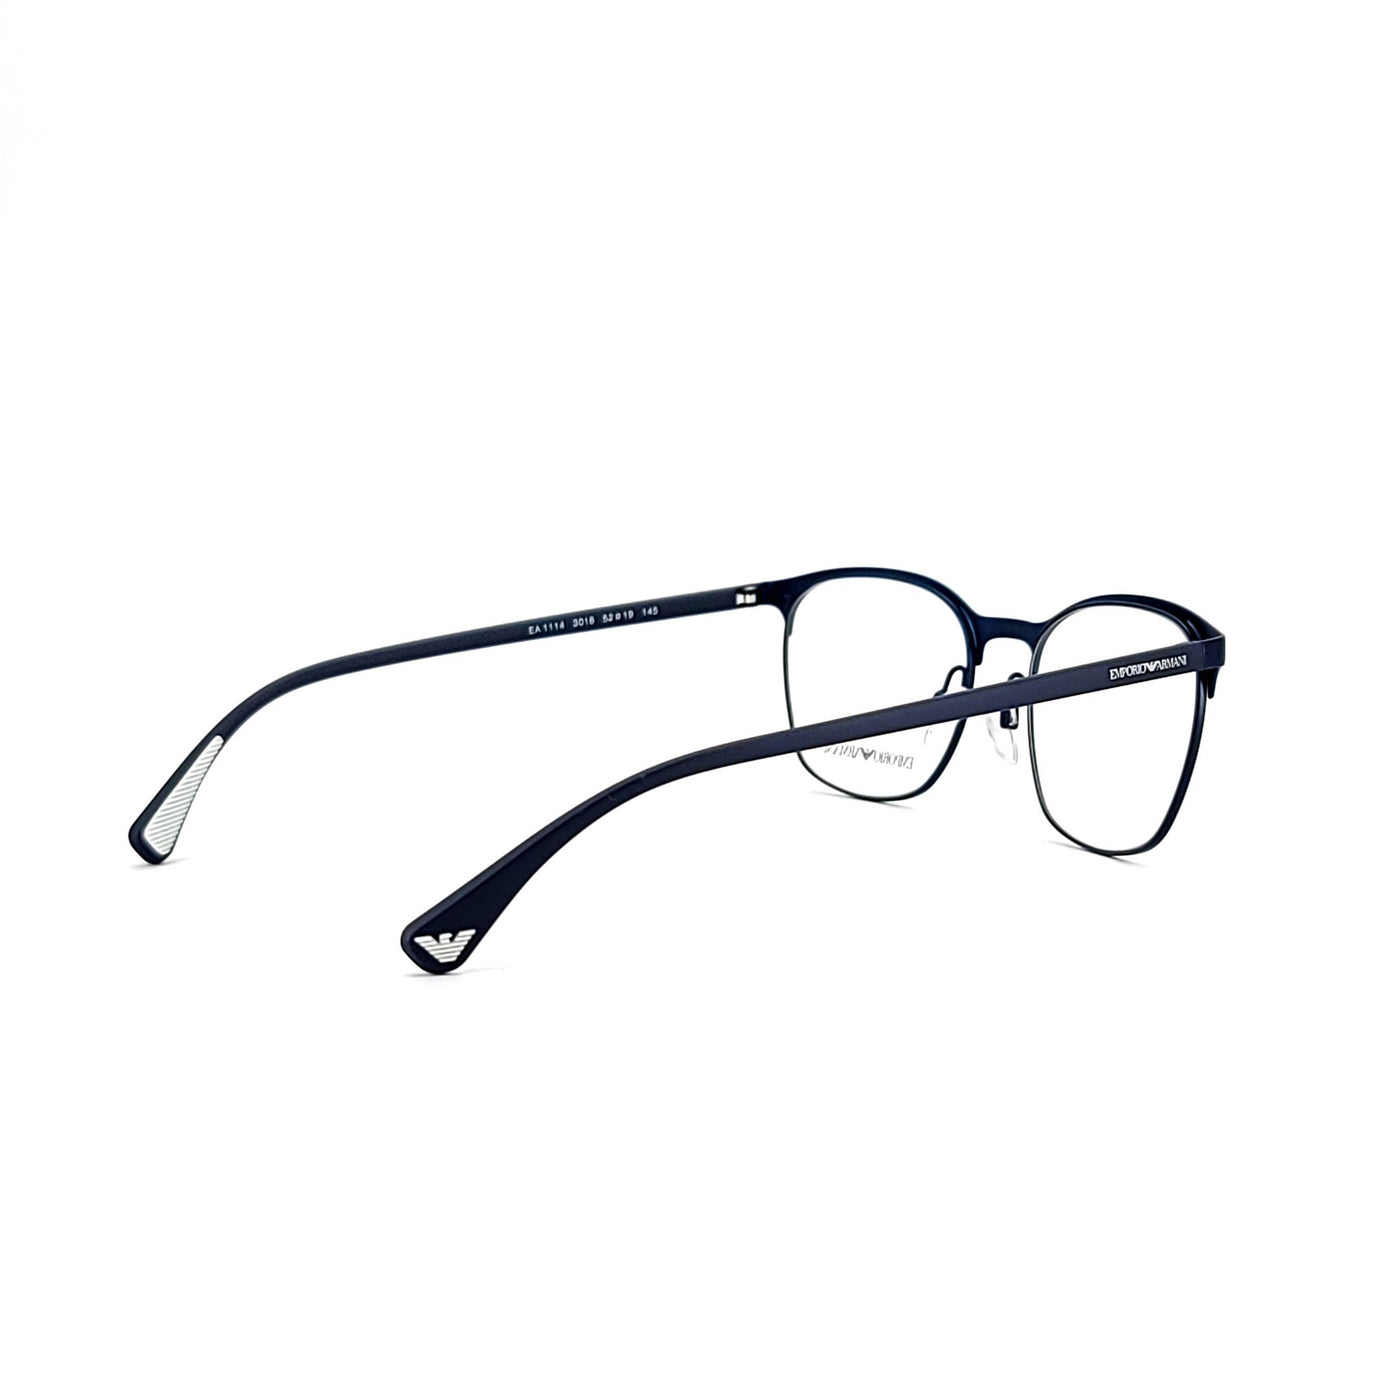 Emporio Armani EA1114/3018 | Eyeglasses - Vision Express Optical Philippines